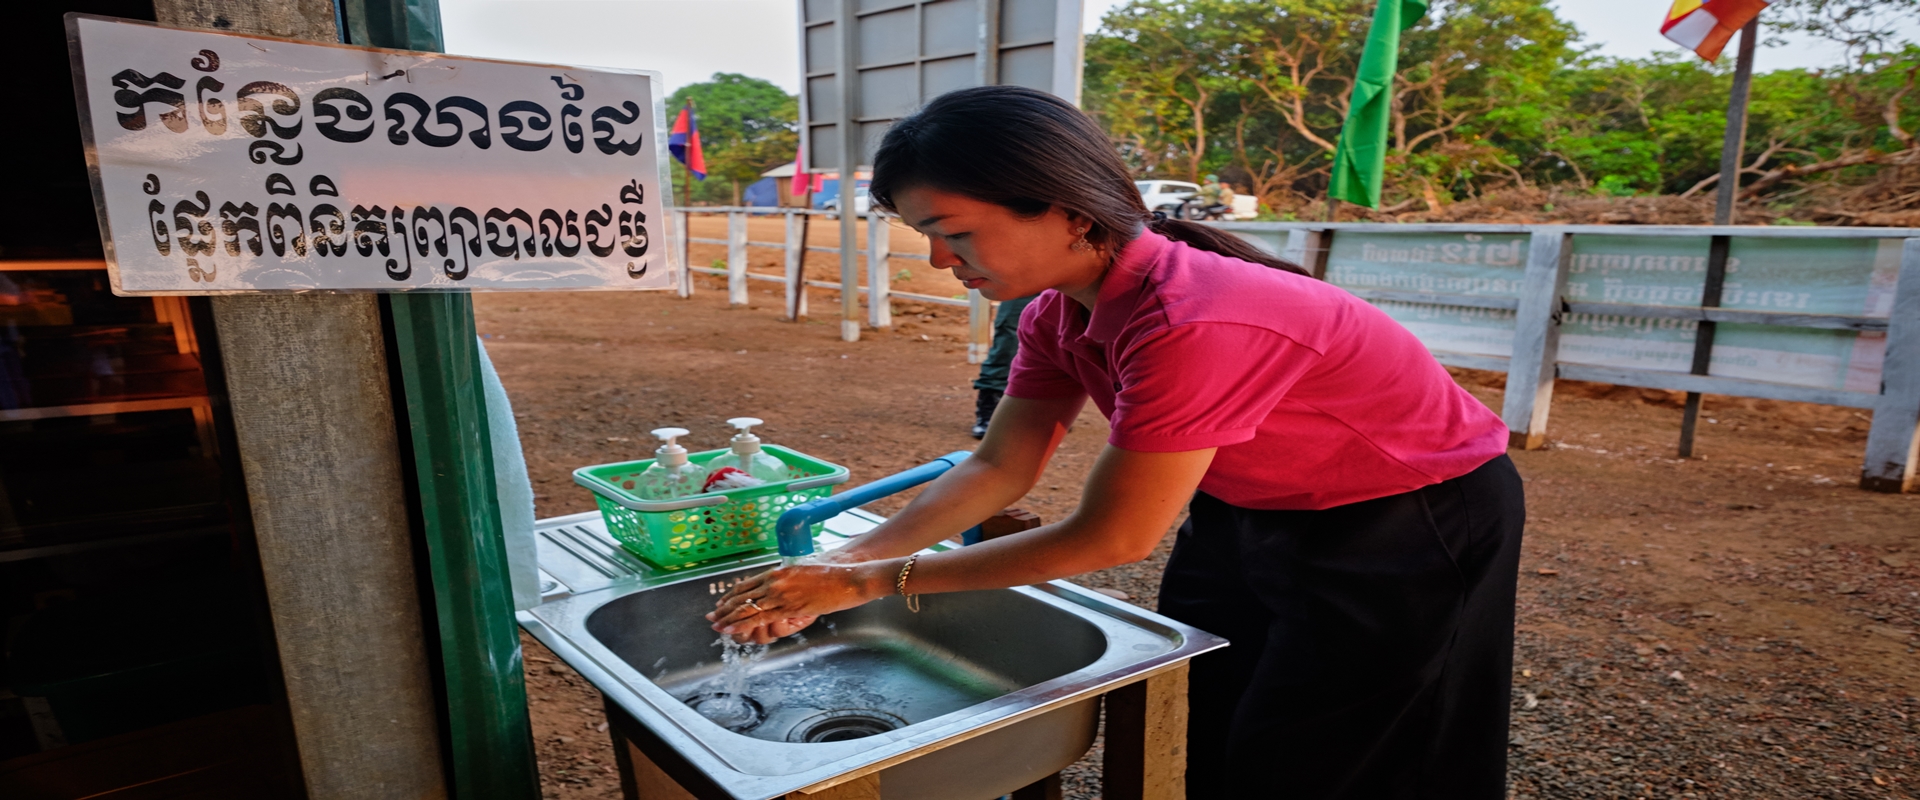 Medizin und Hygiene in Kambodscha